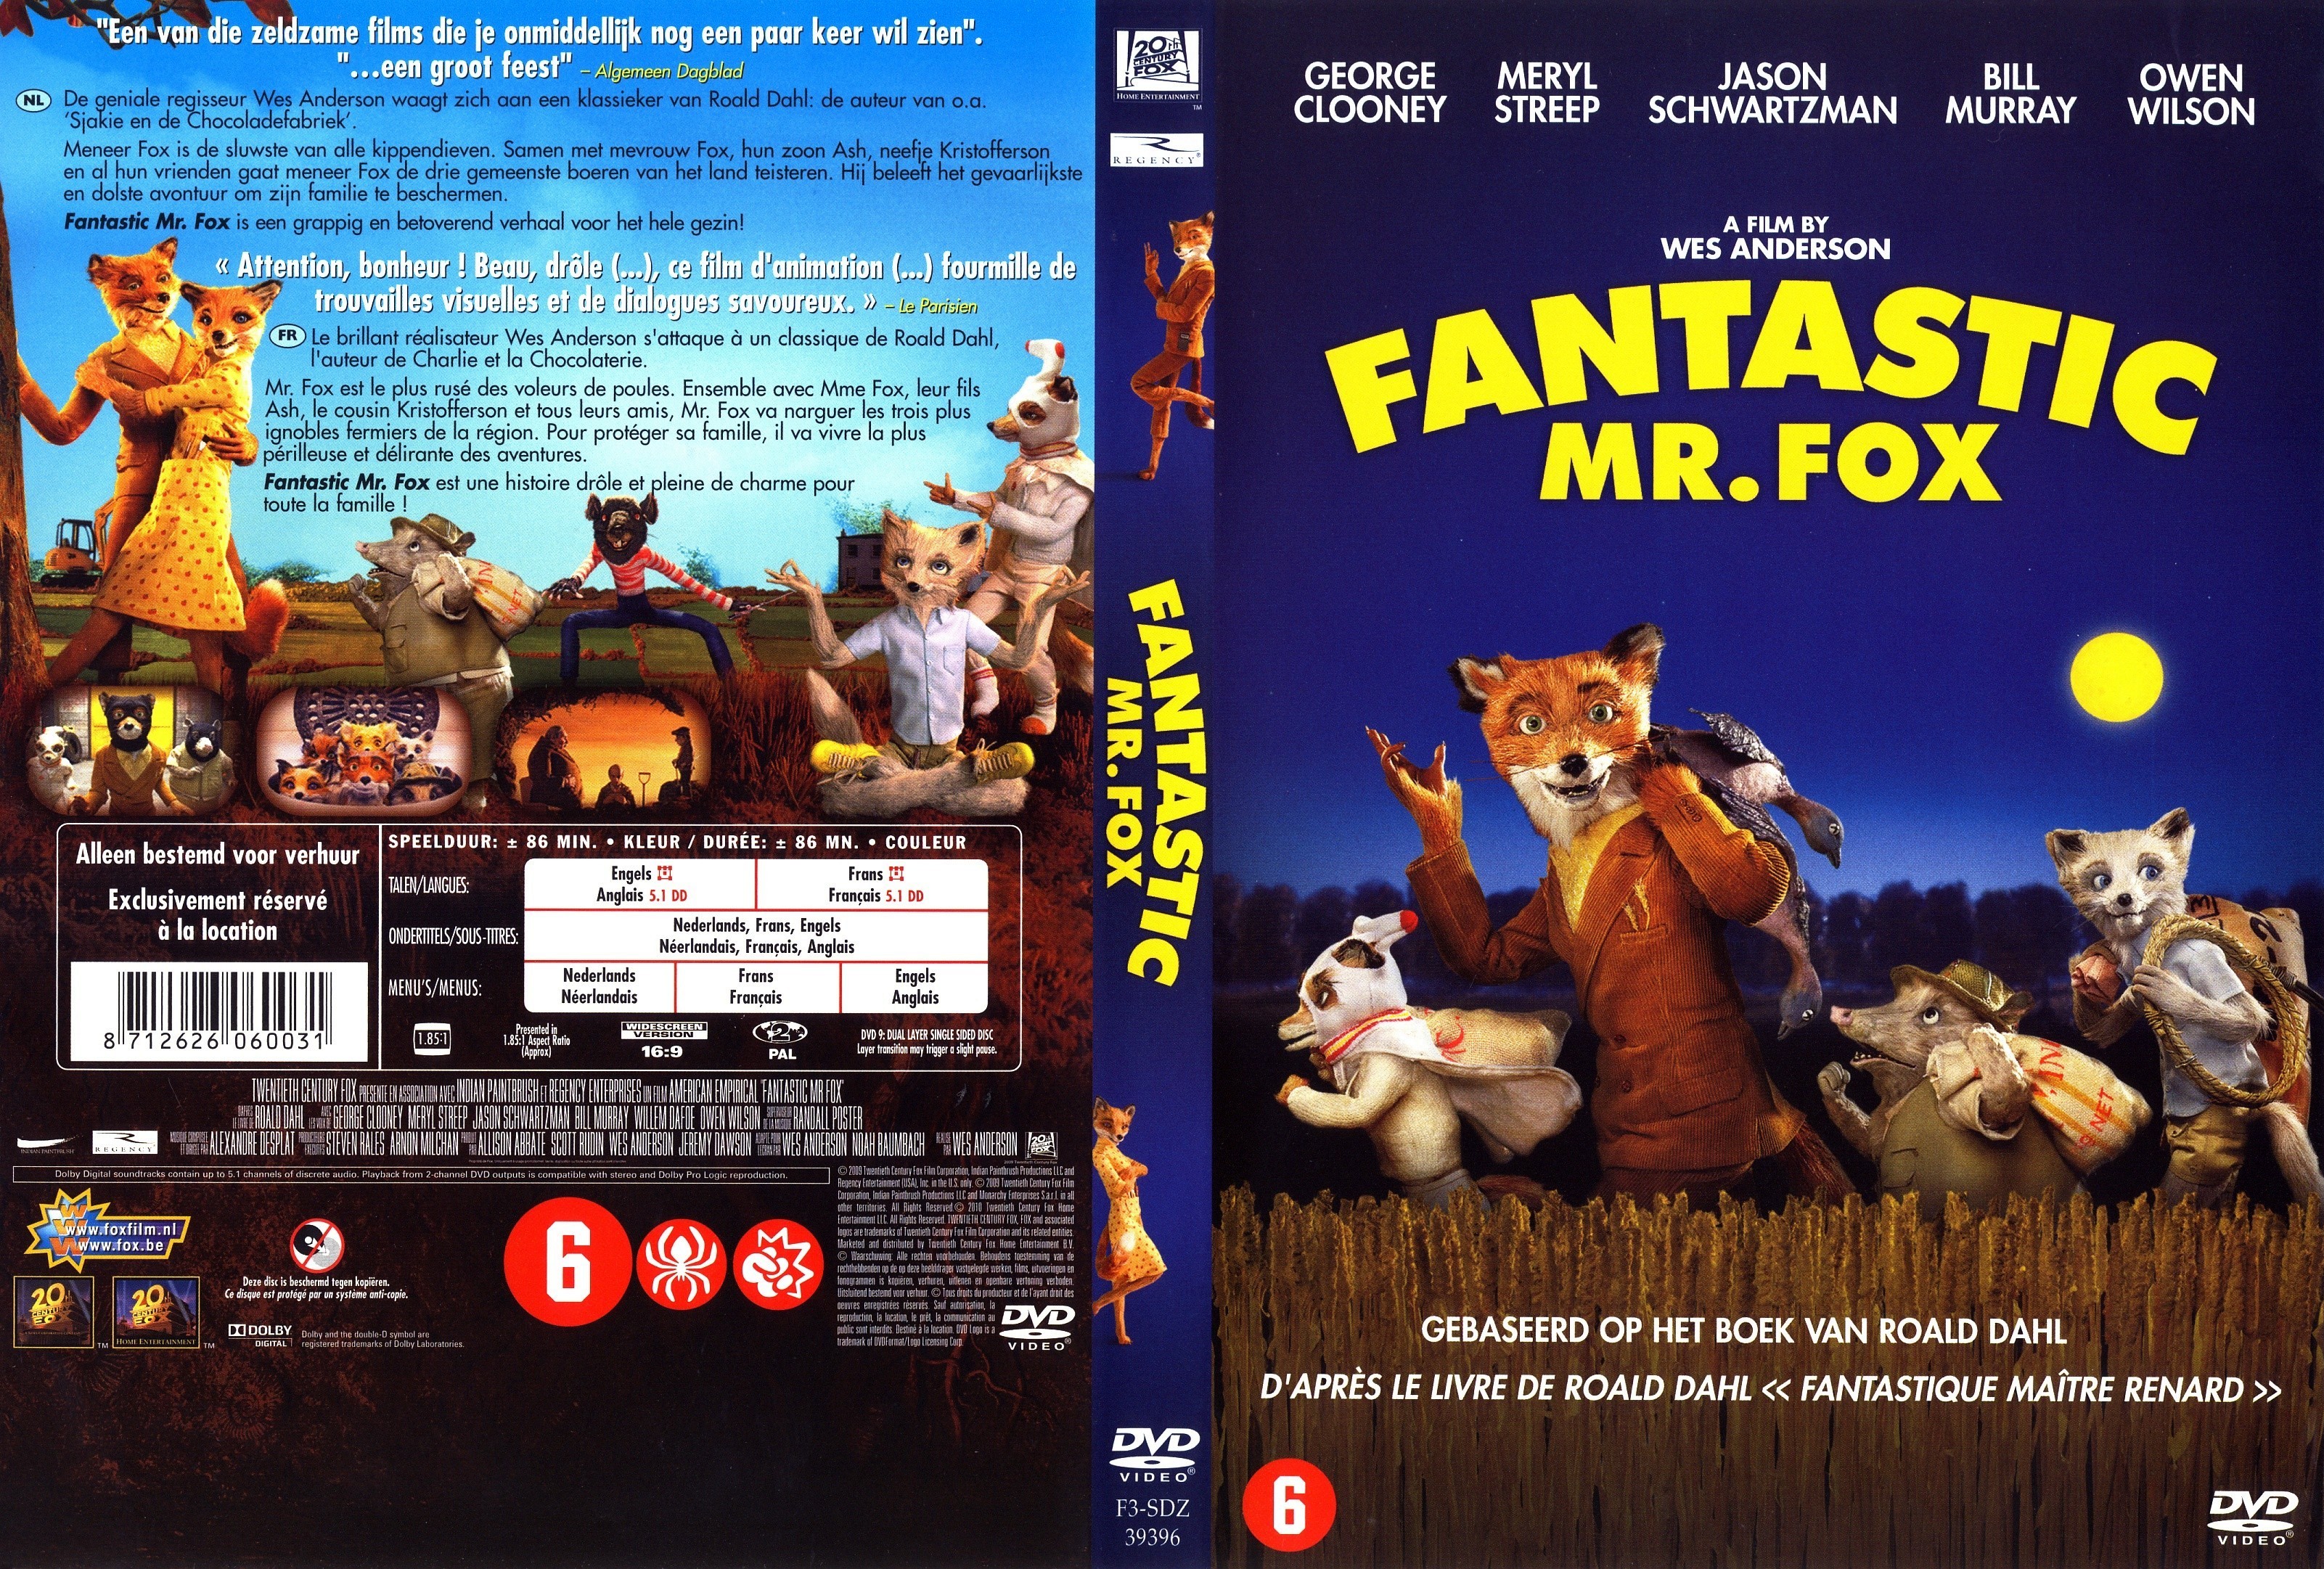 Jaquette DVD Fantastic Mr Fox v2